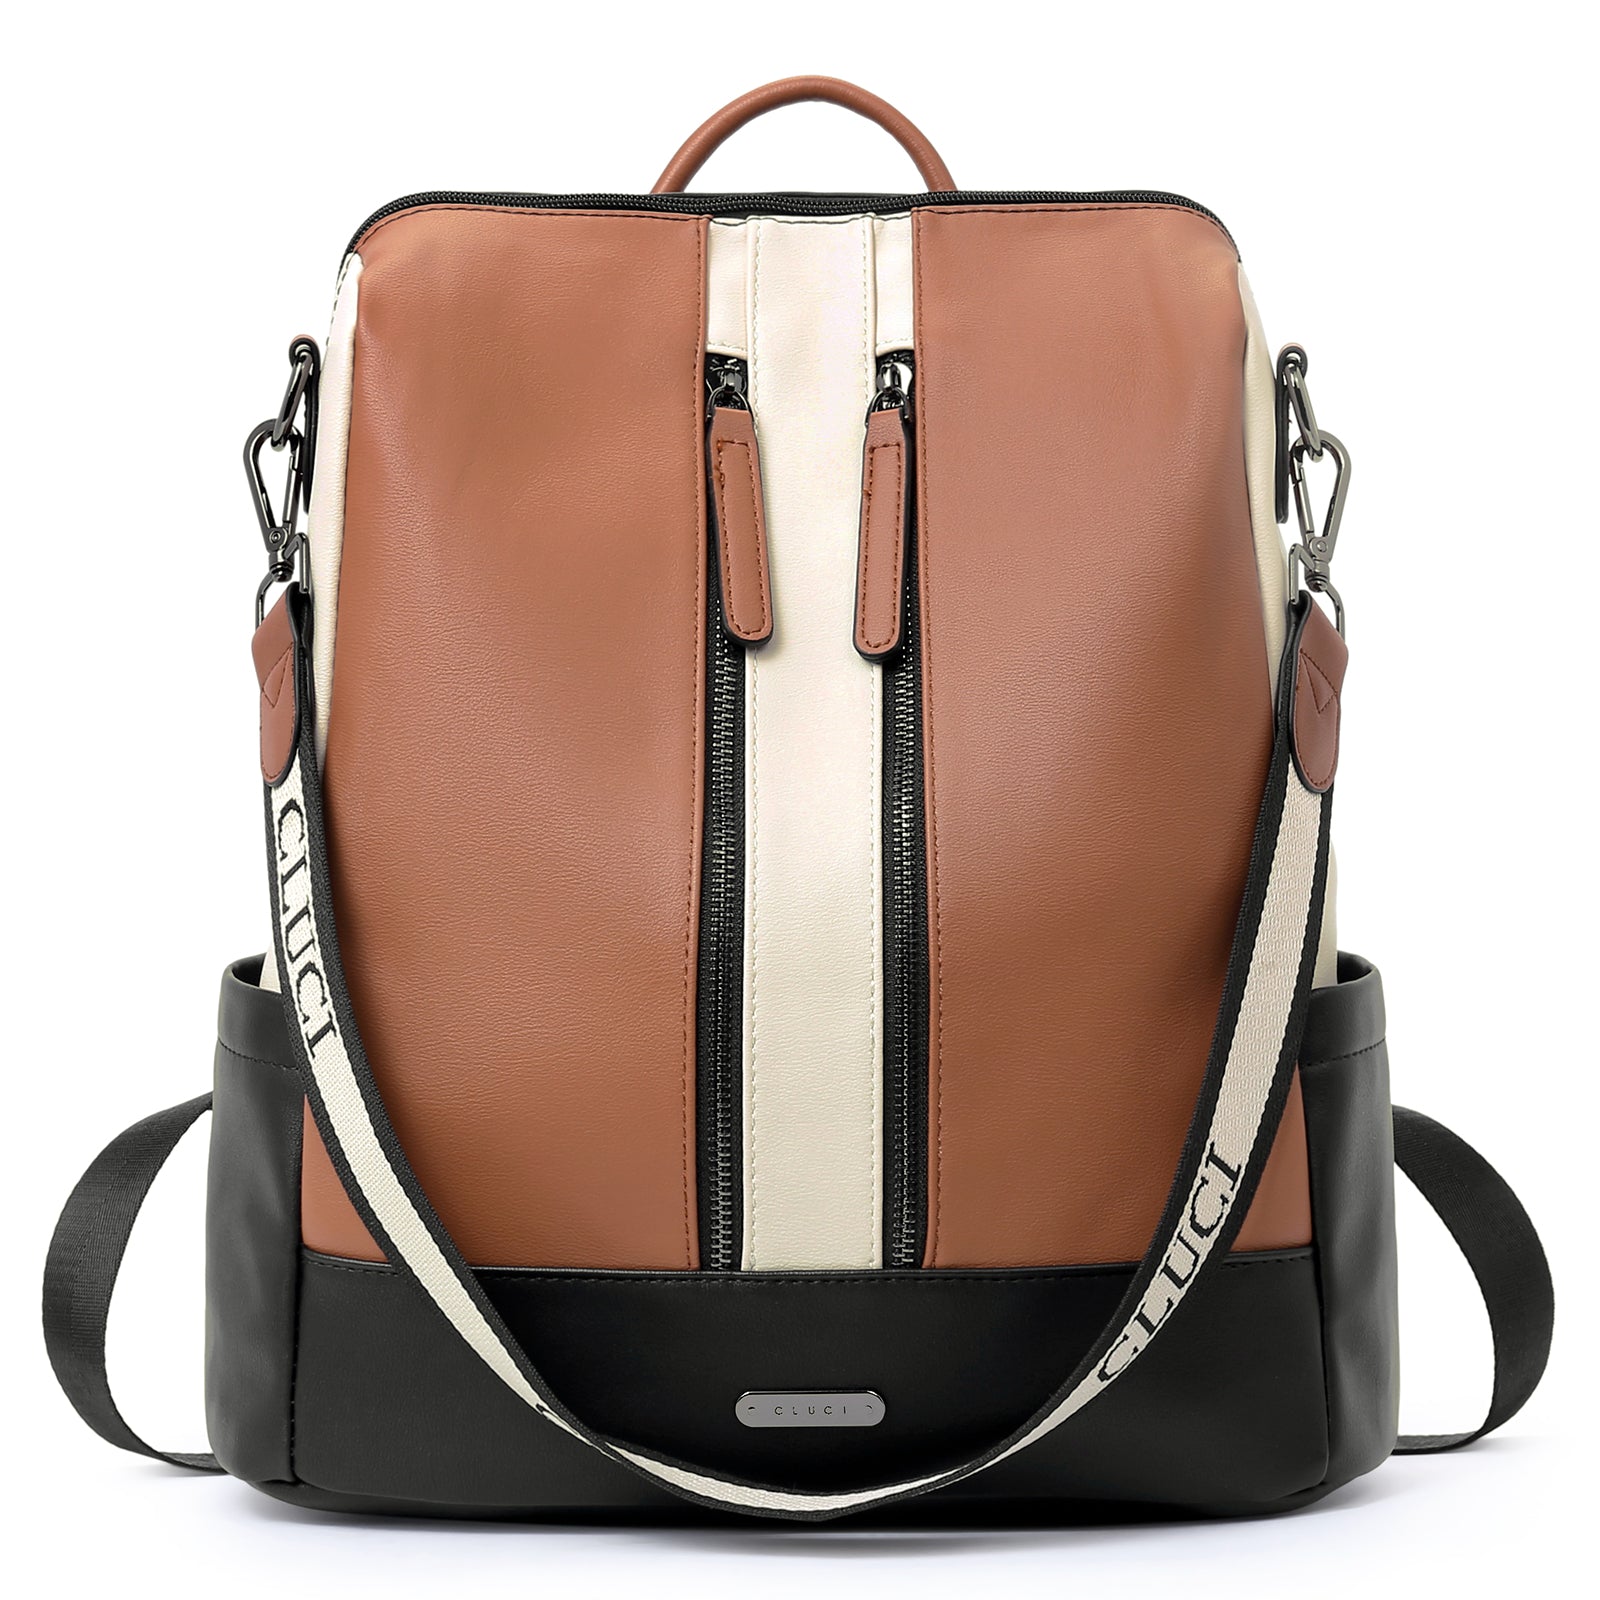 DAVIDNILE Women's Fashion Backpack Purses Multipurpose Design Handbags and Shoulder Bag PU Leather Travel Bag